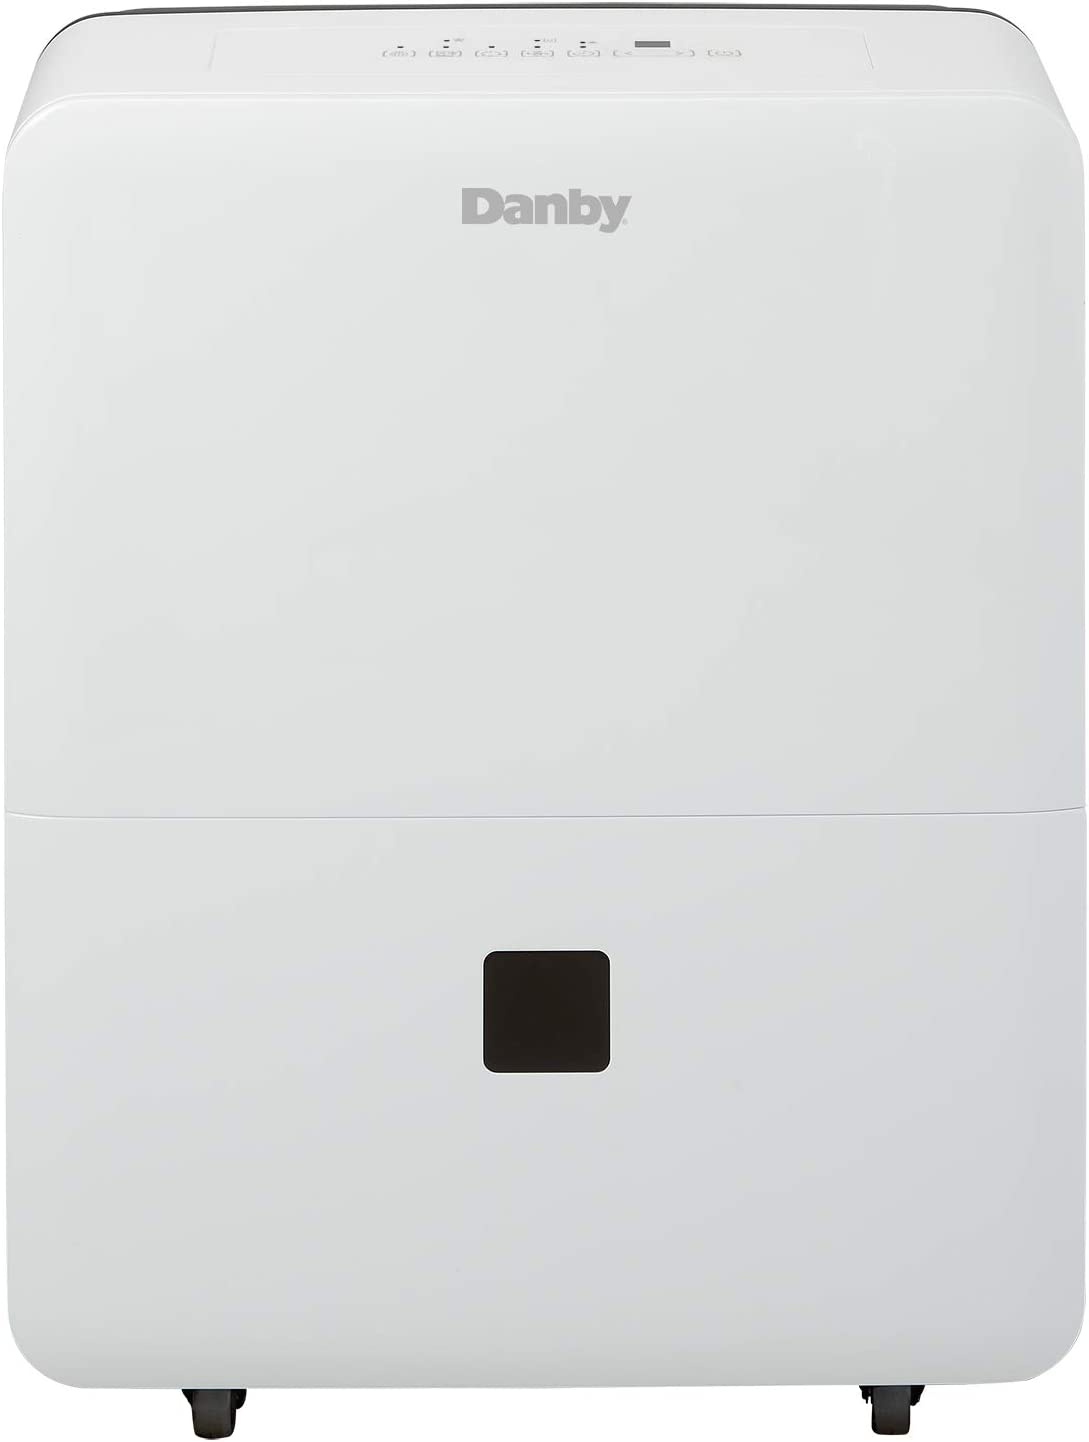 Danby Auto Restart & De-Icer Dehumidifier